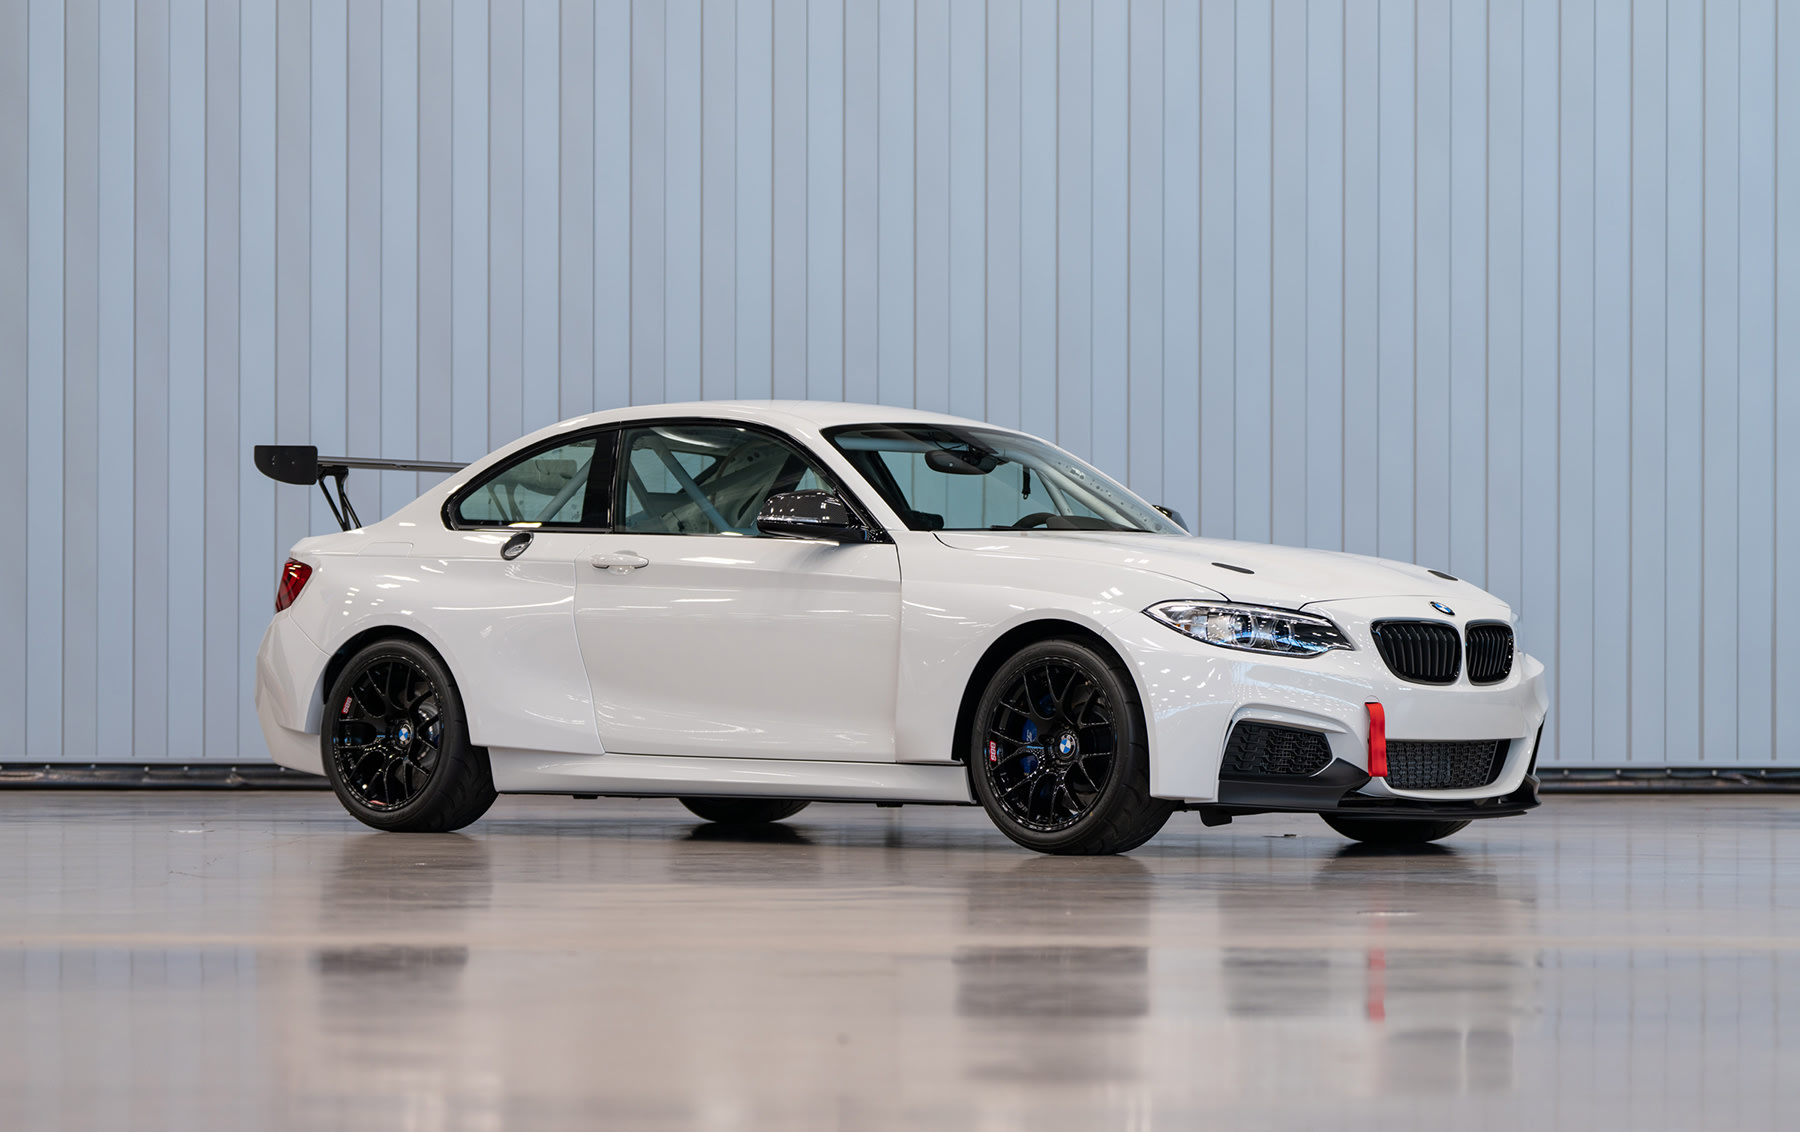 2016 BMW M235i Racing